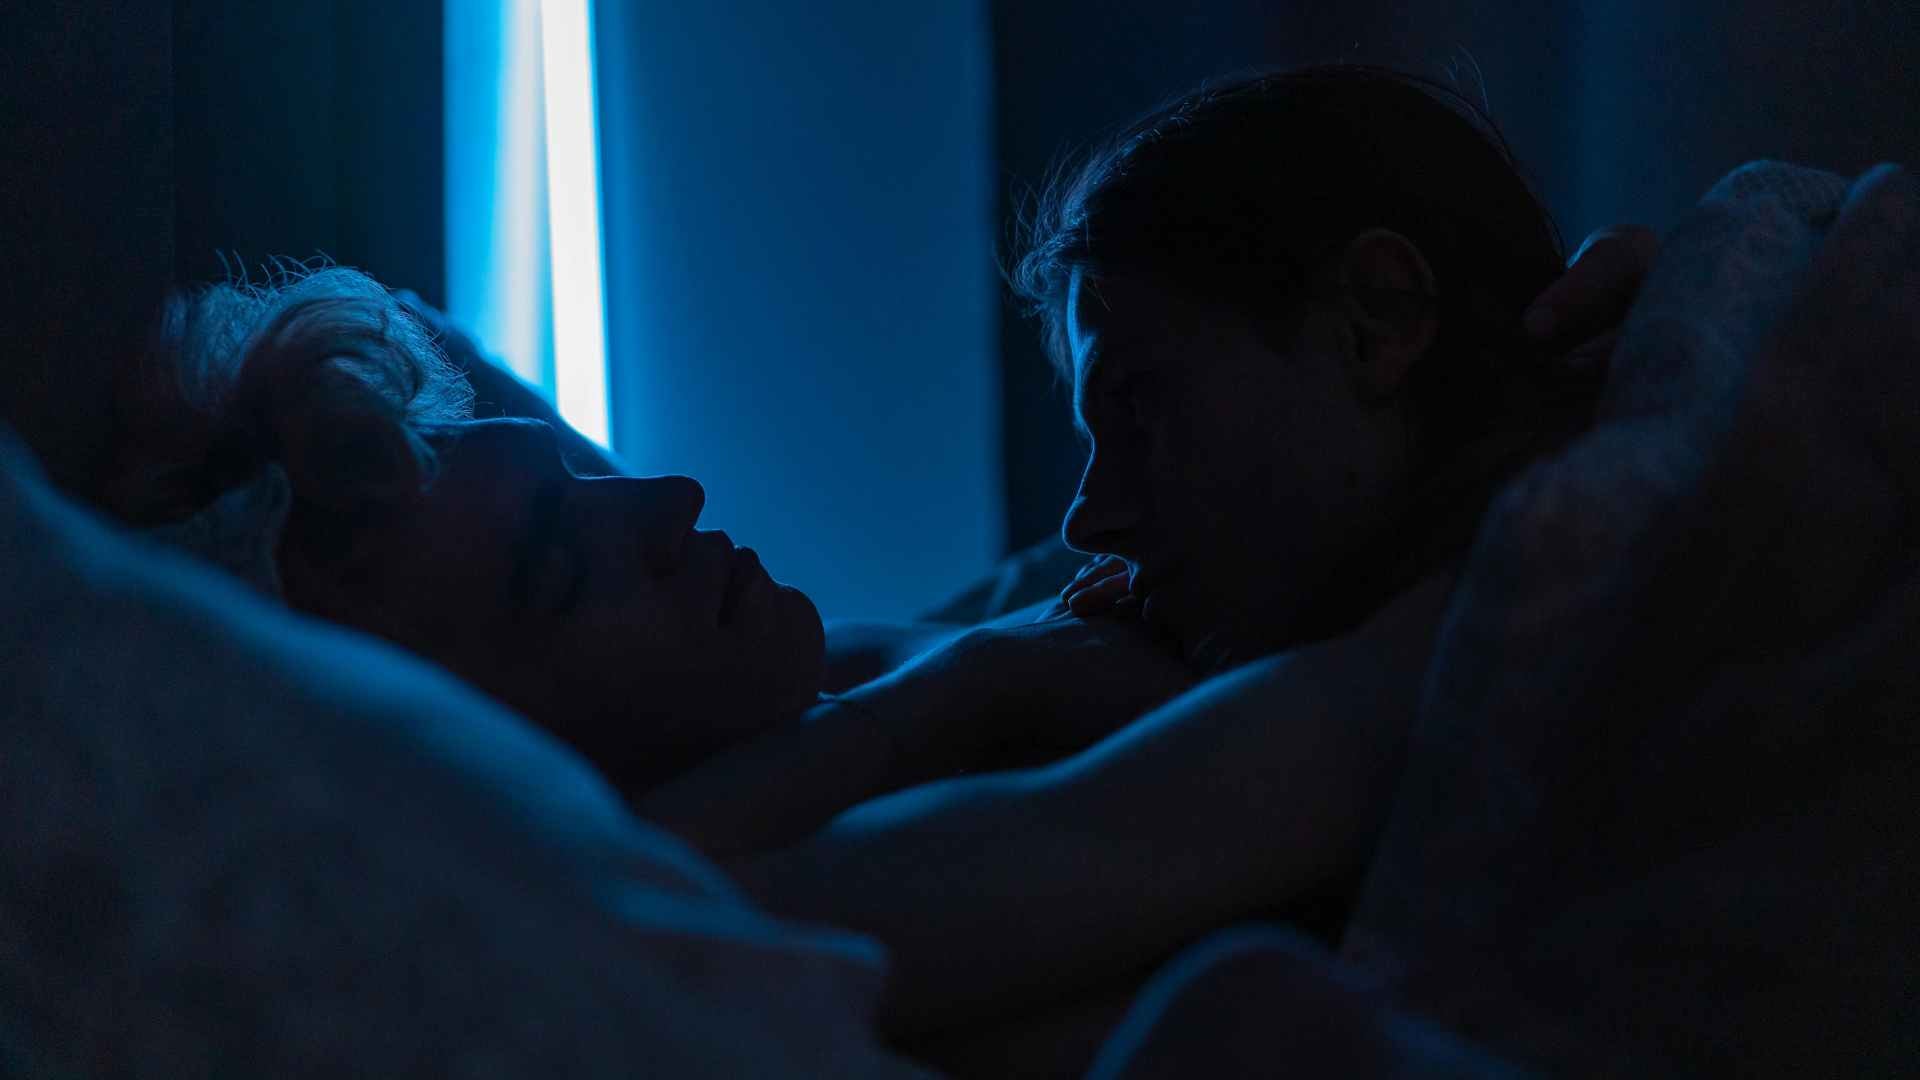 A Man Looking at his Partner while Sleeping